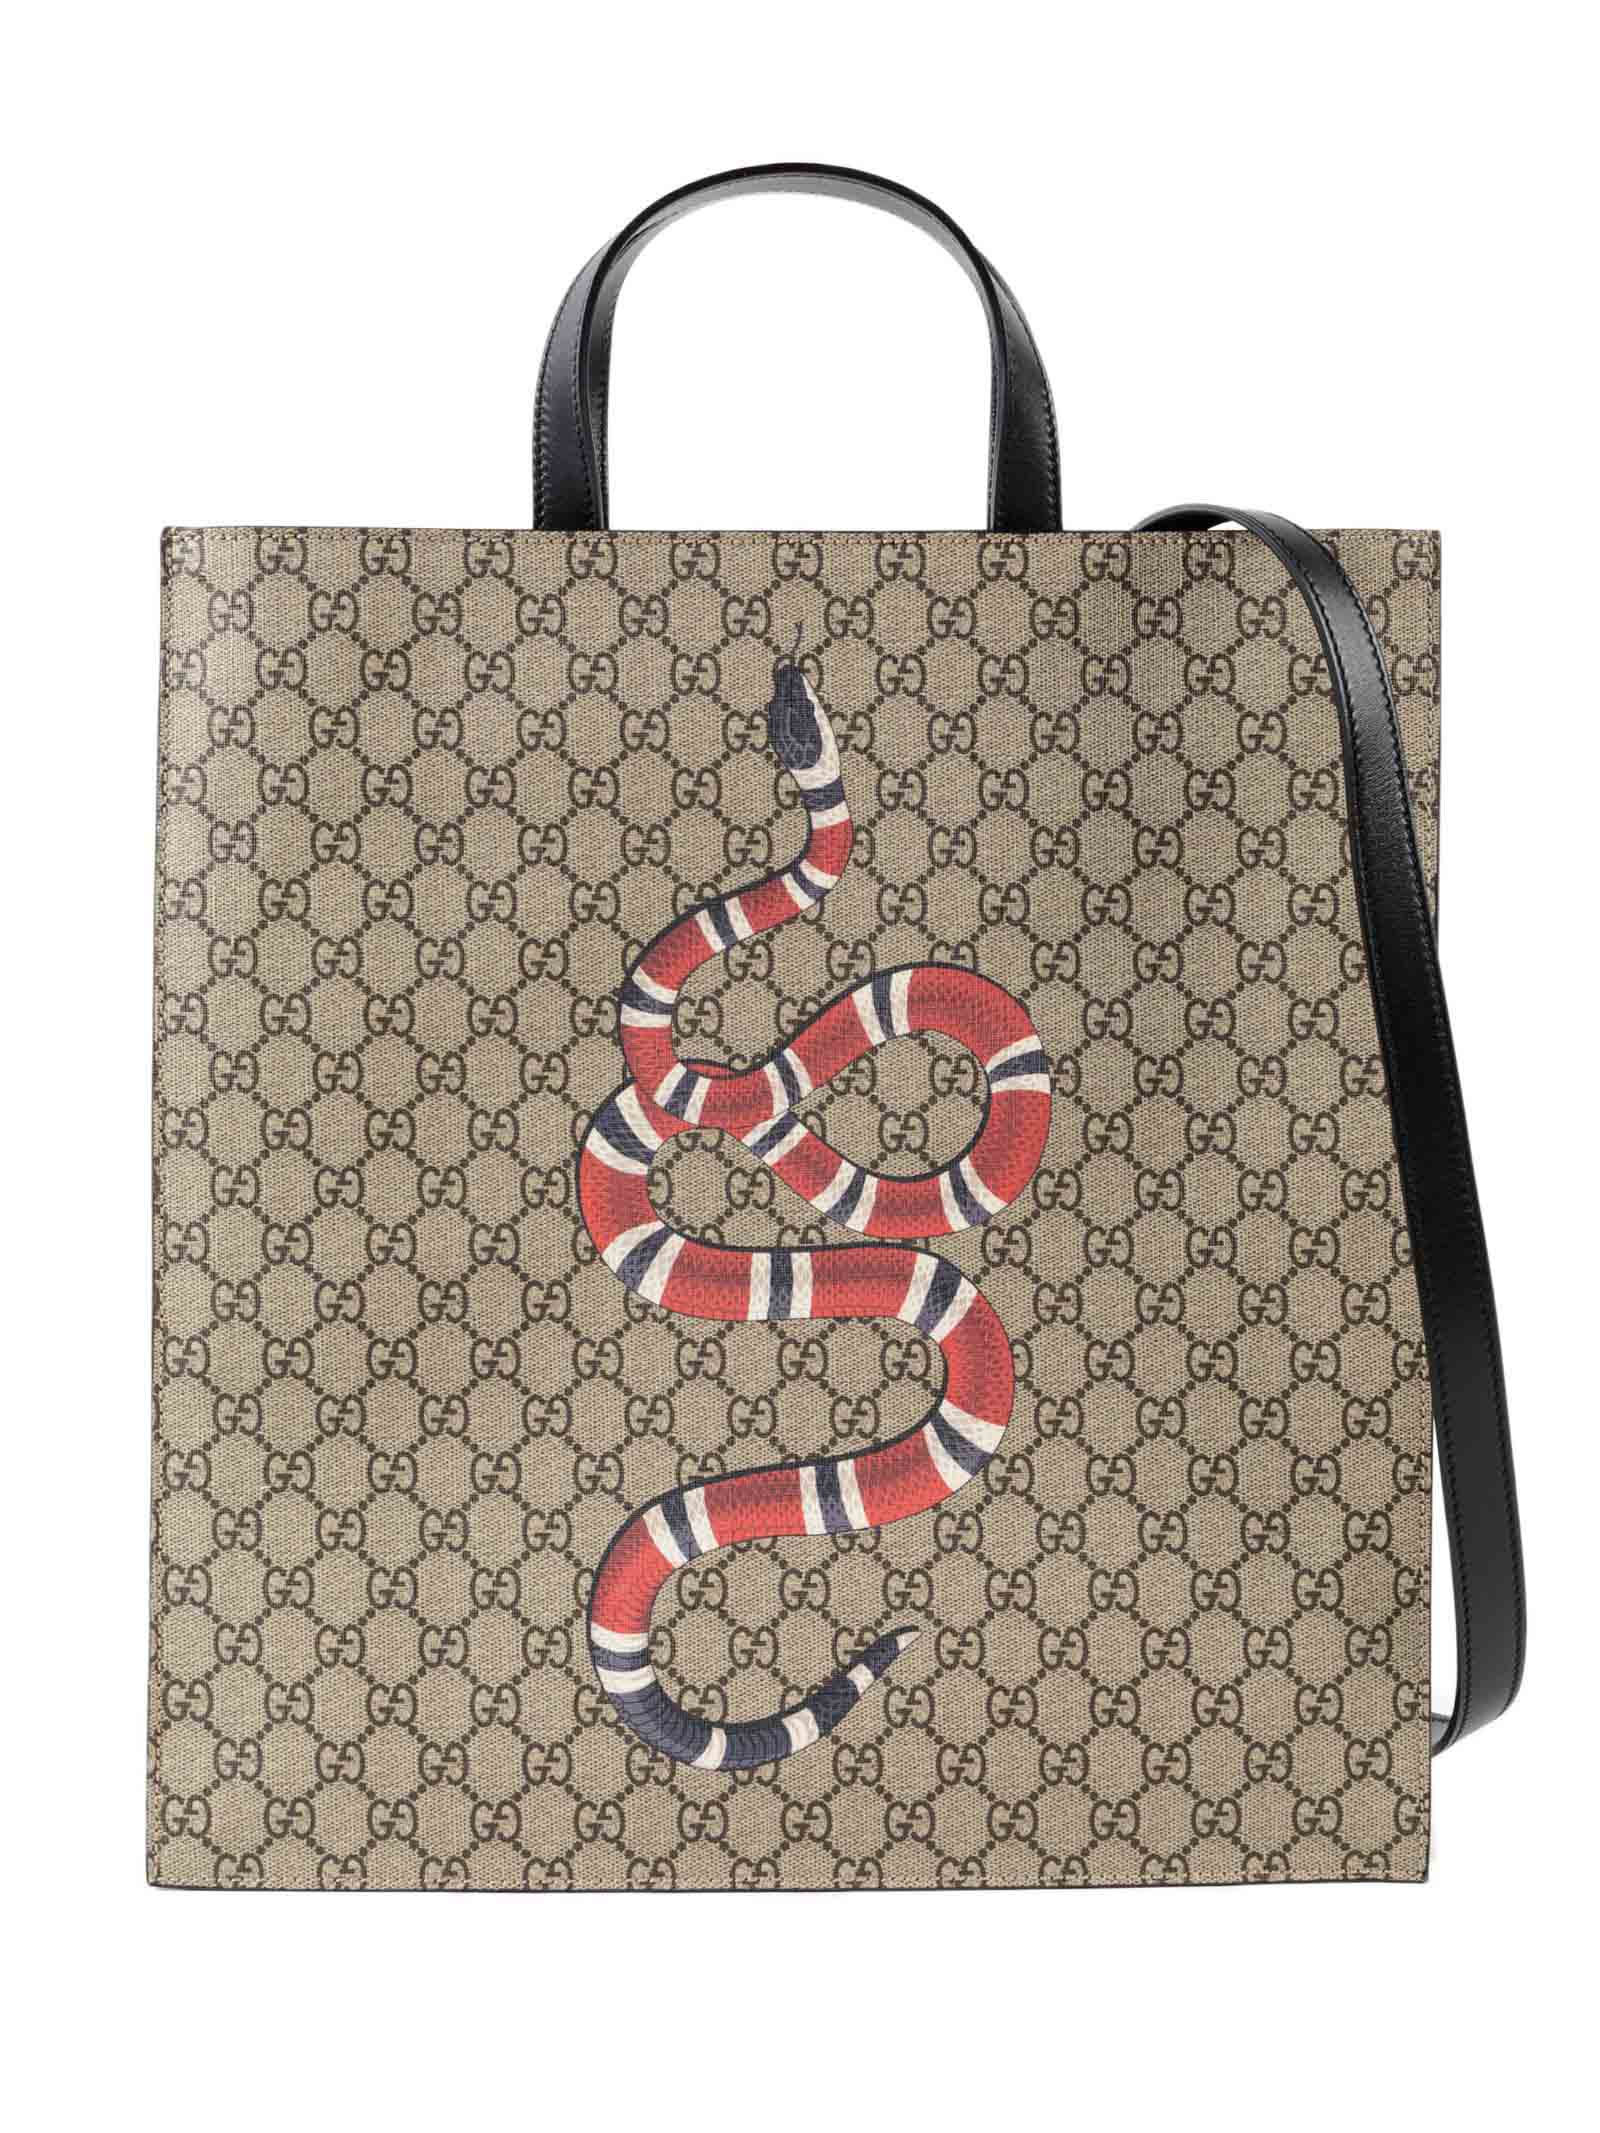 Coral Snake Gucci Logo - Gucci Tote Gg Supr. Coral Snake 450950/K5M1T - 8666 BE.EBONY/MULTI ...